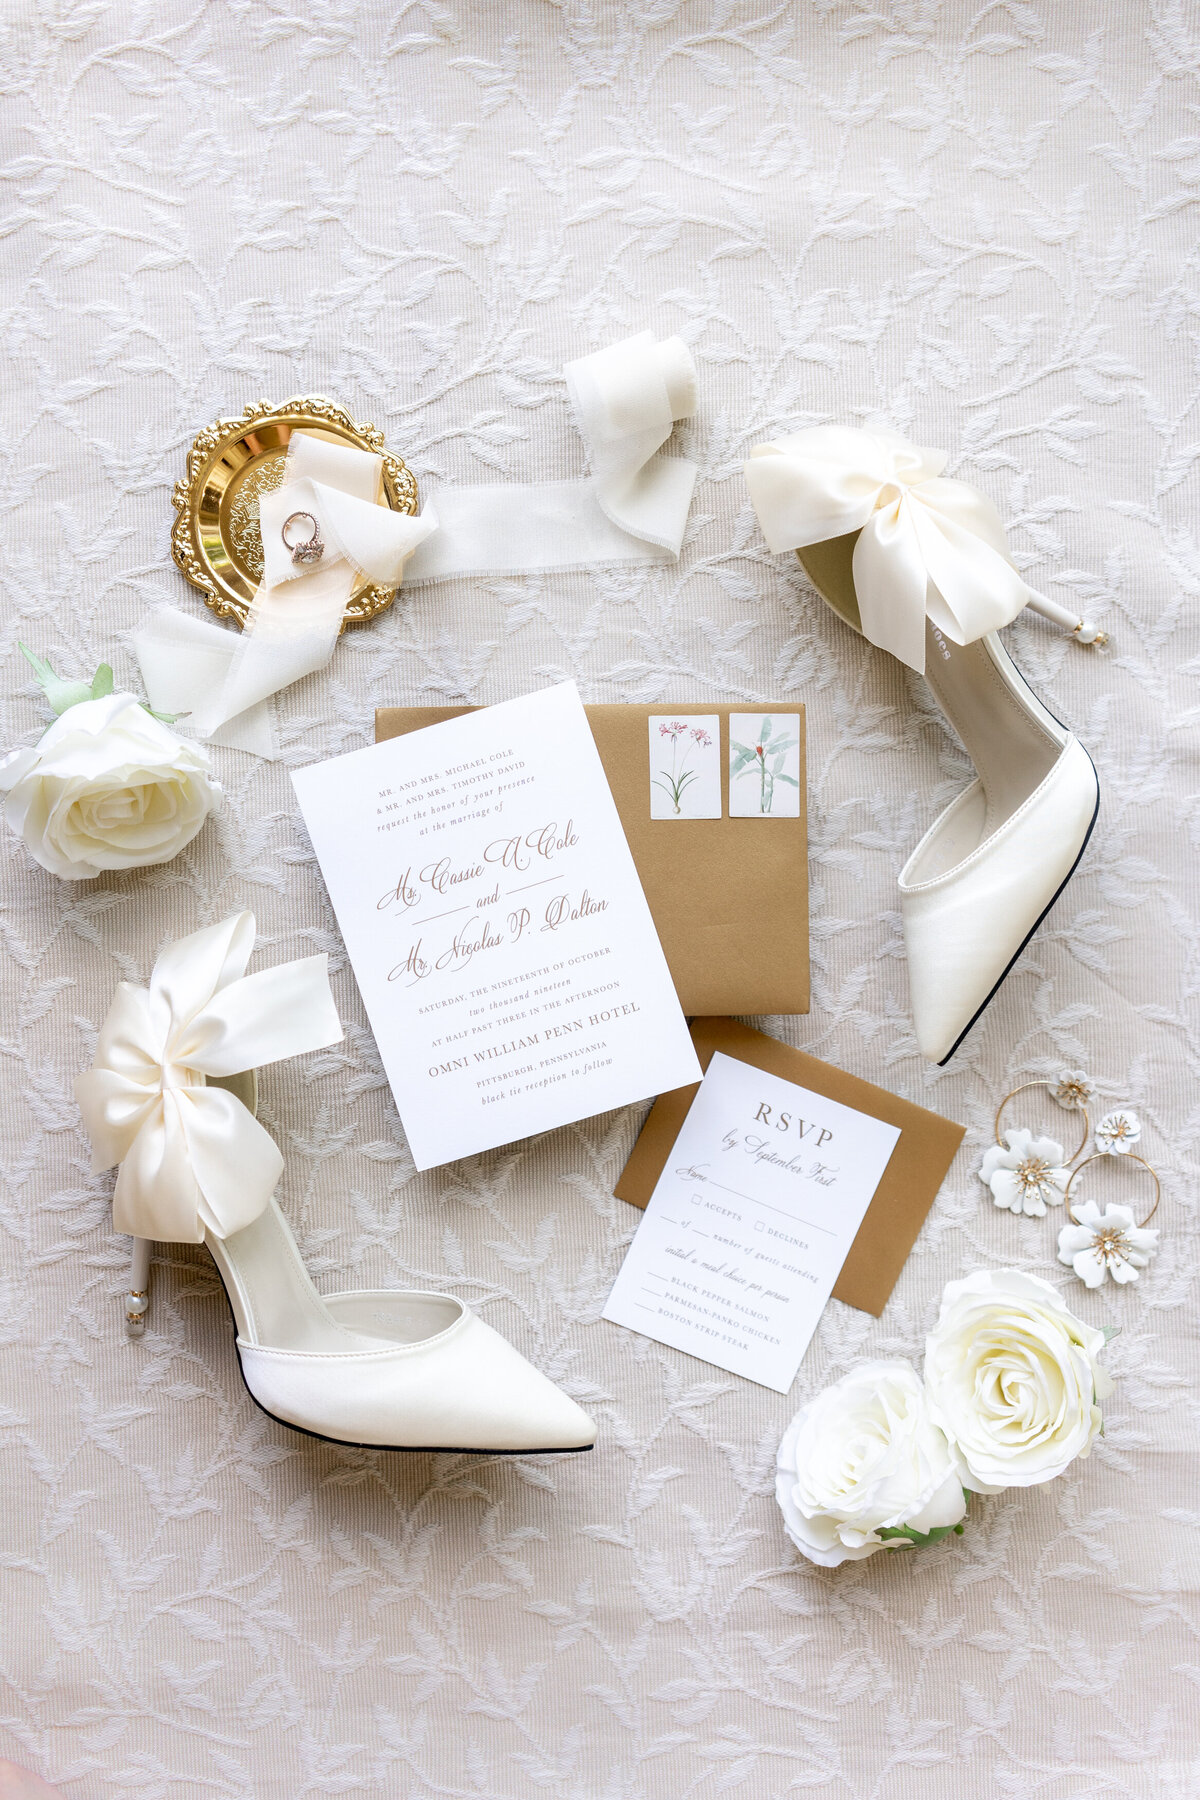 justineyandle-elegant-invitation-wedding-1